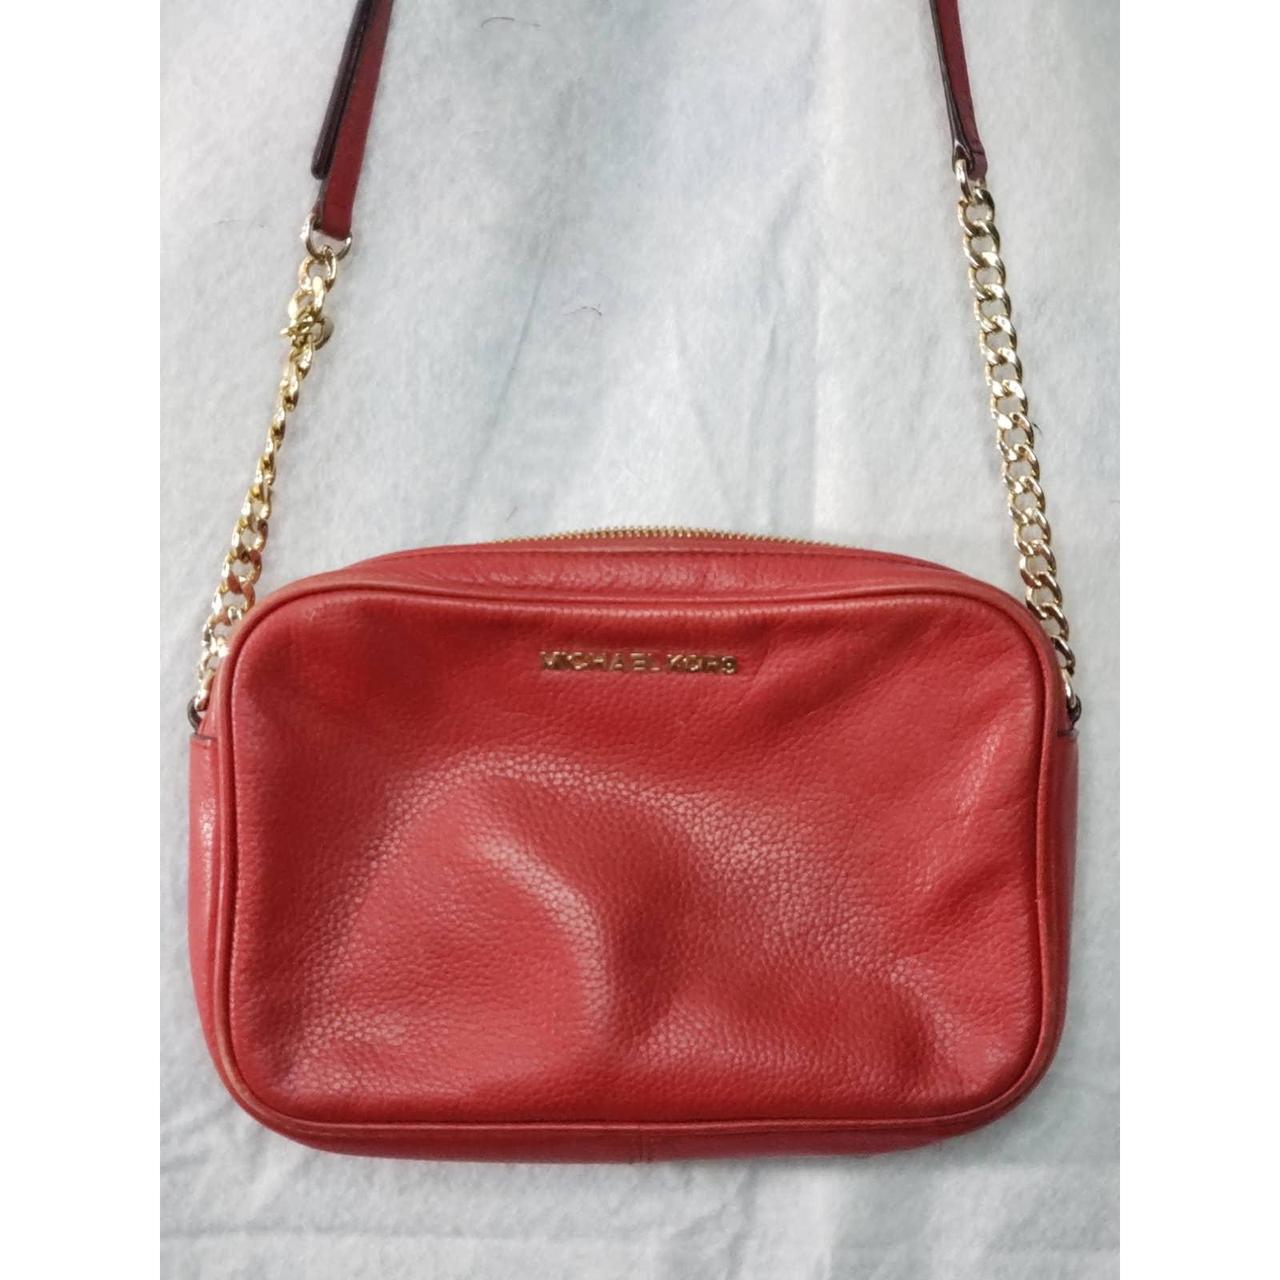 Michael Kors, Bags, Michael Kors Red Handbag Purse Gold Chain